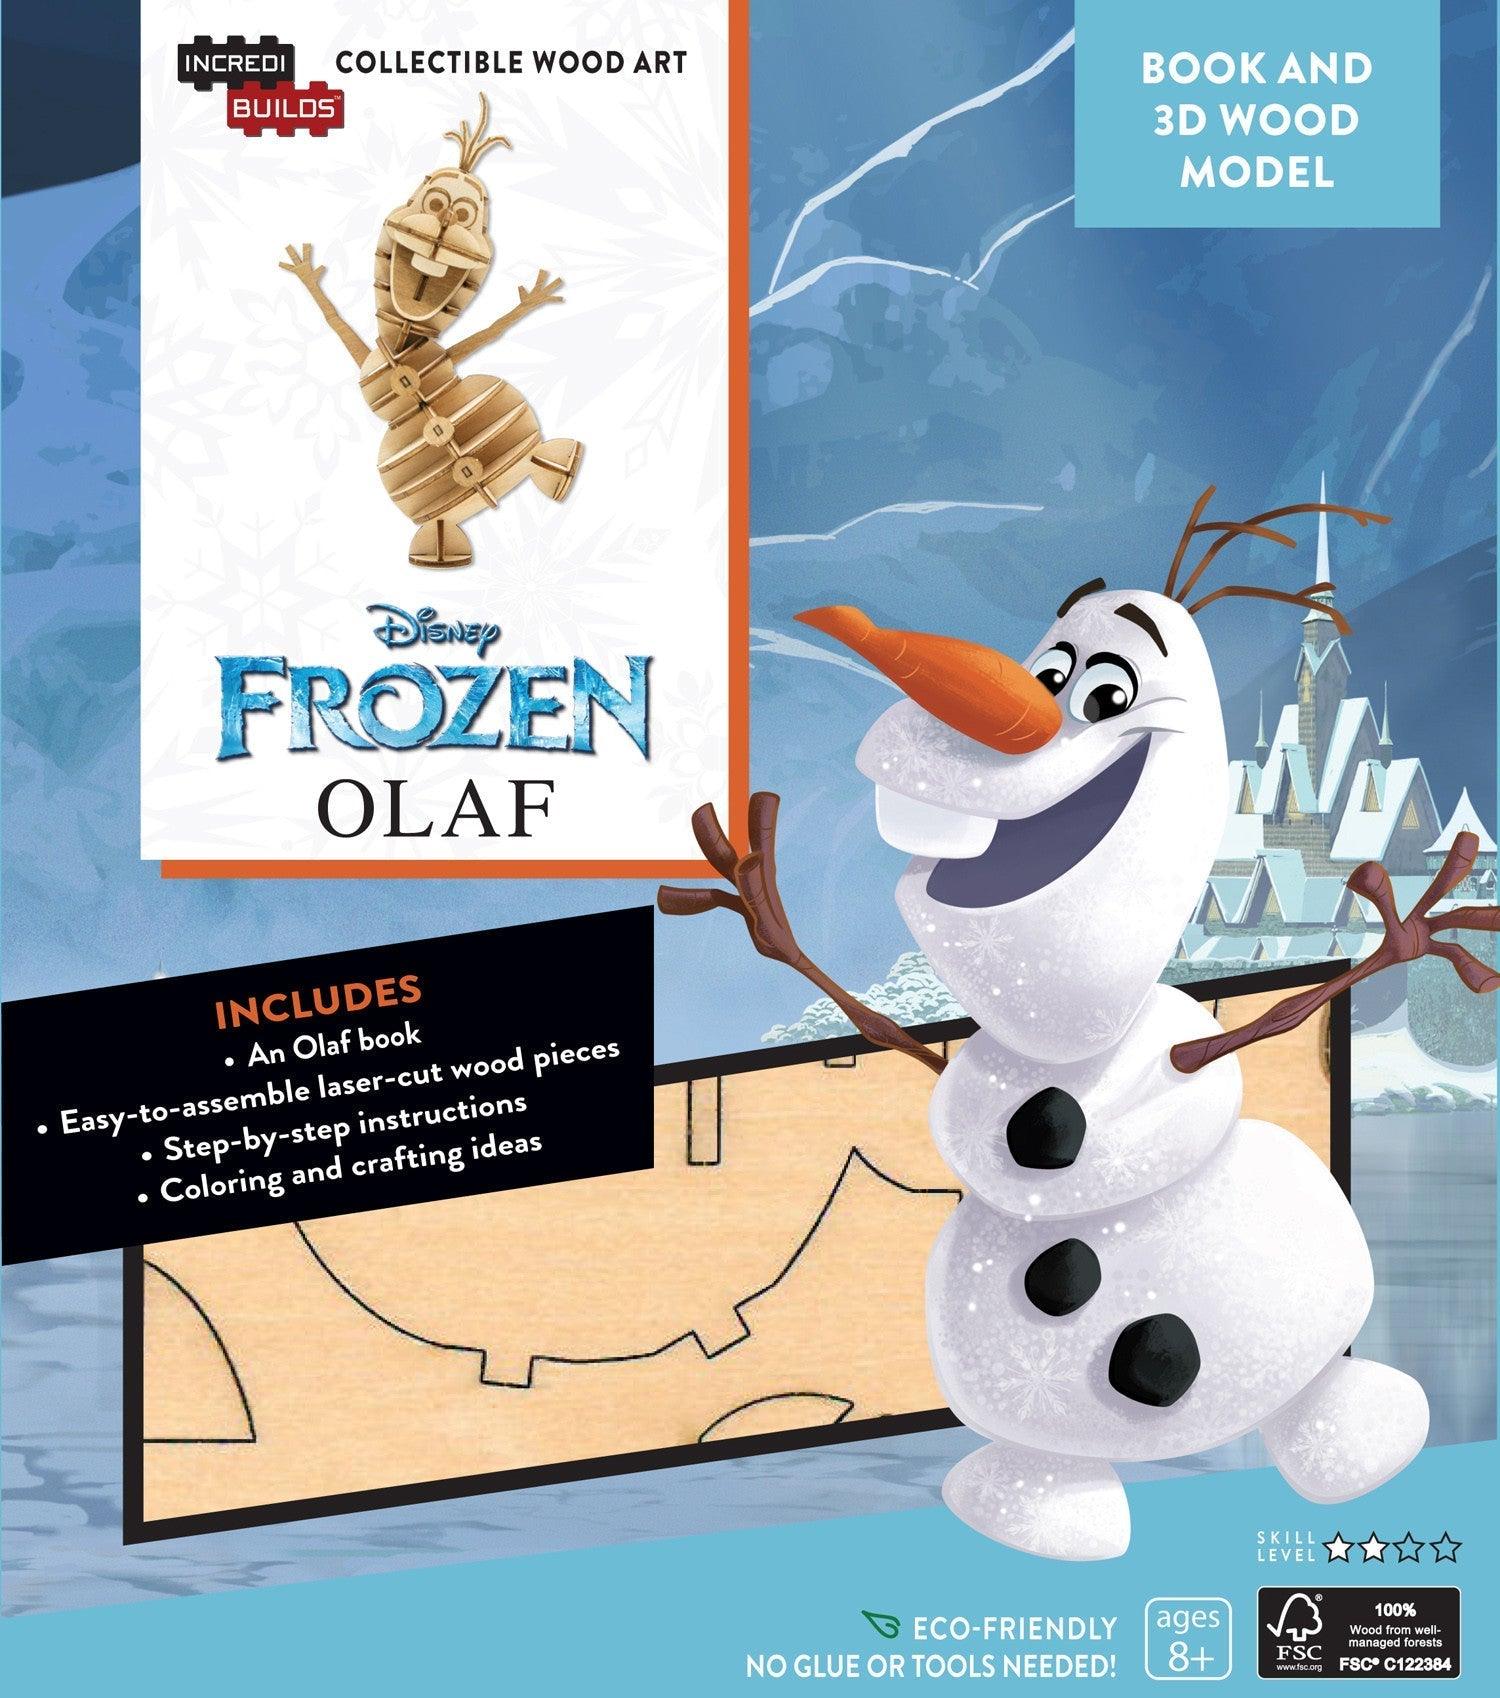 VR-49746 Incredibuilds Disney Frozen Olaf 3D Wood Model and Book - Insight Editions - Titan Pop Culture